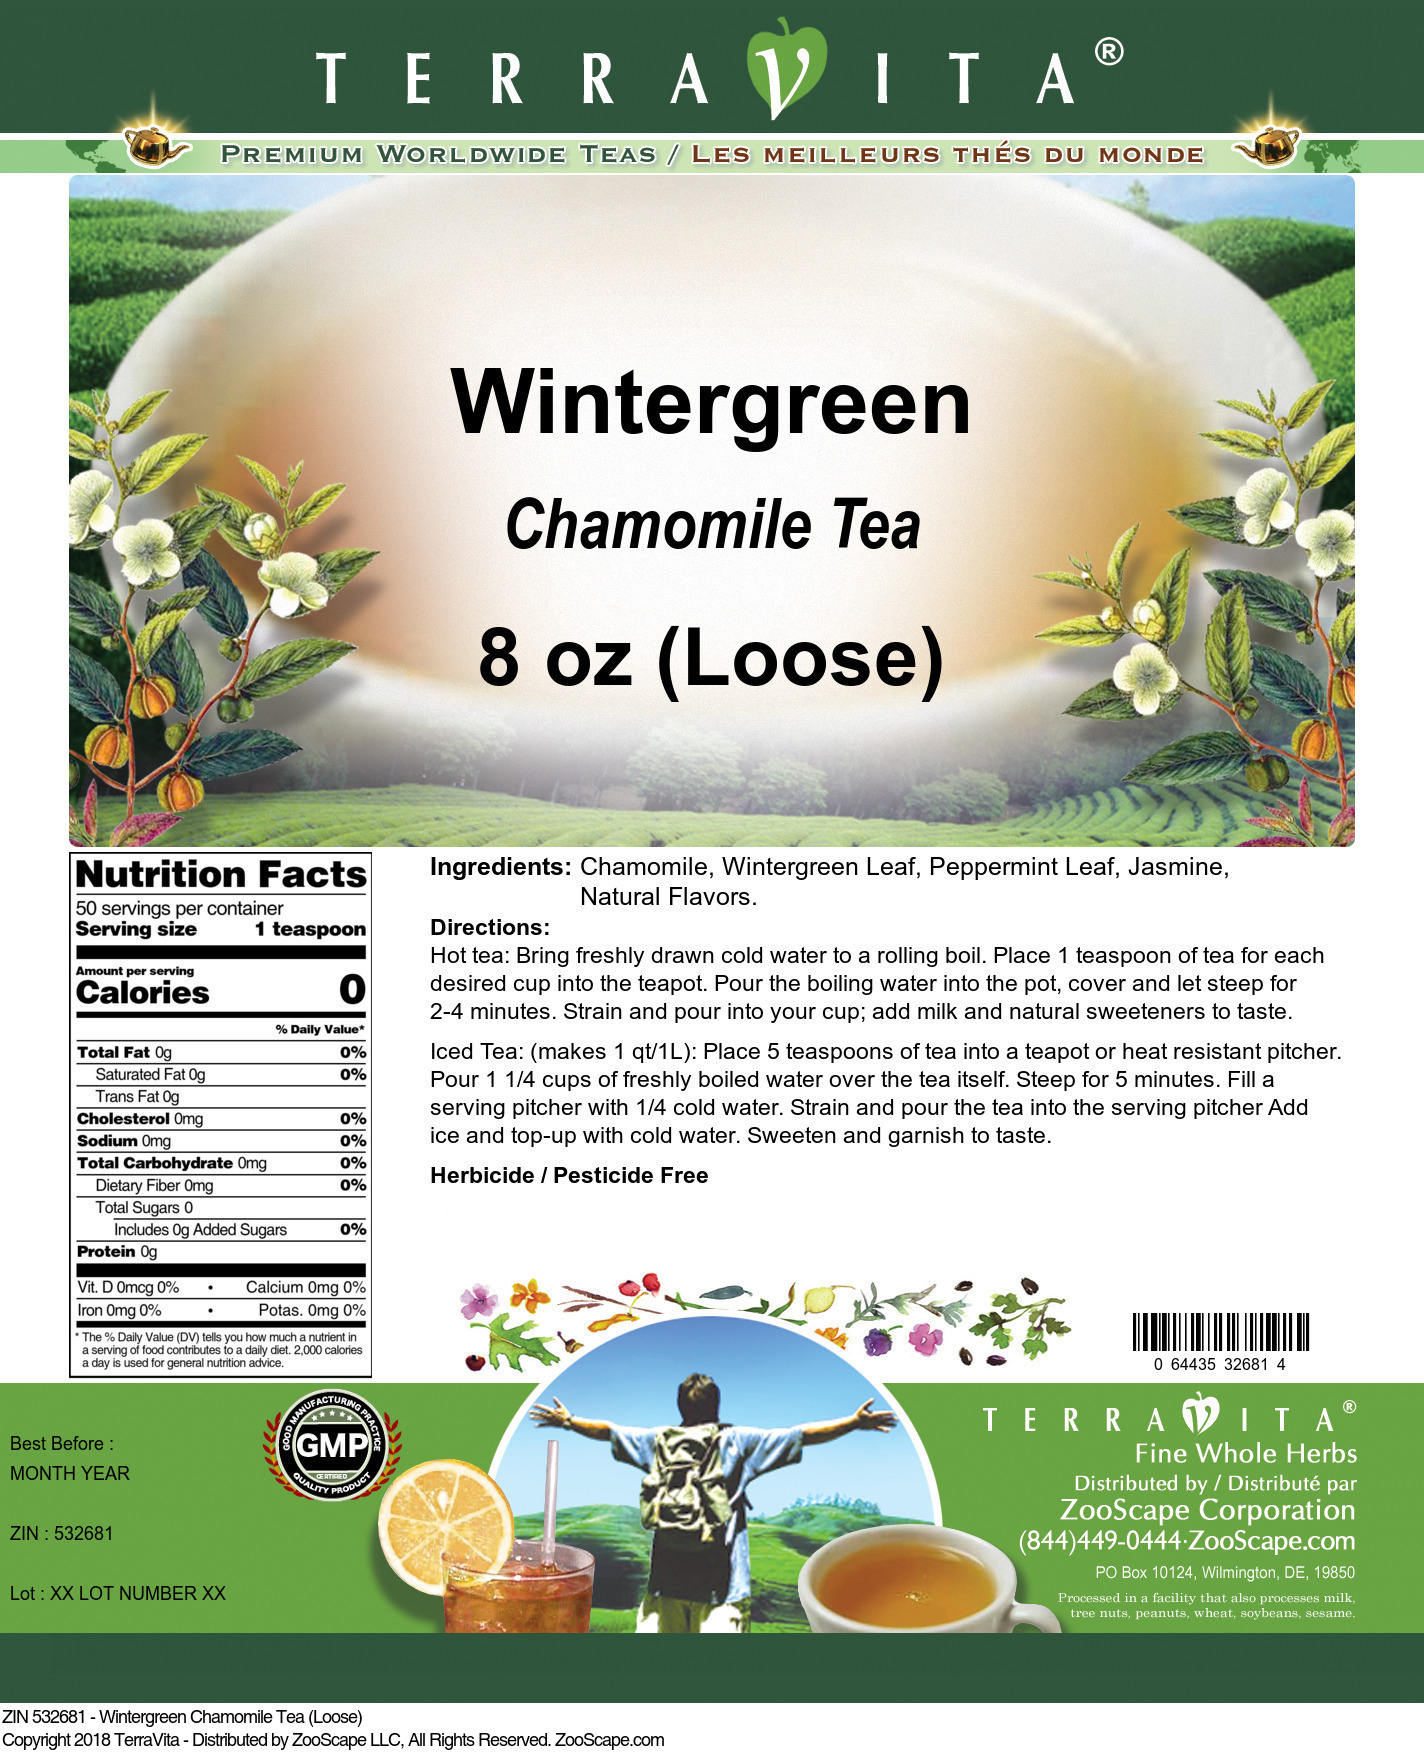 Wintergreen Chamomile Tea (Loose) - Label